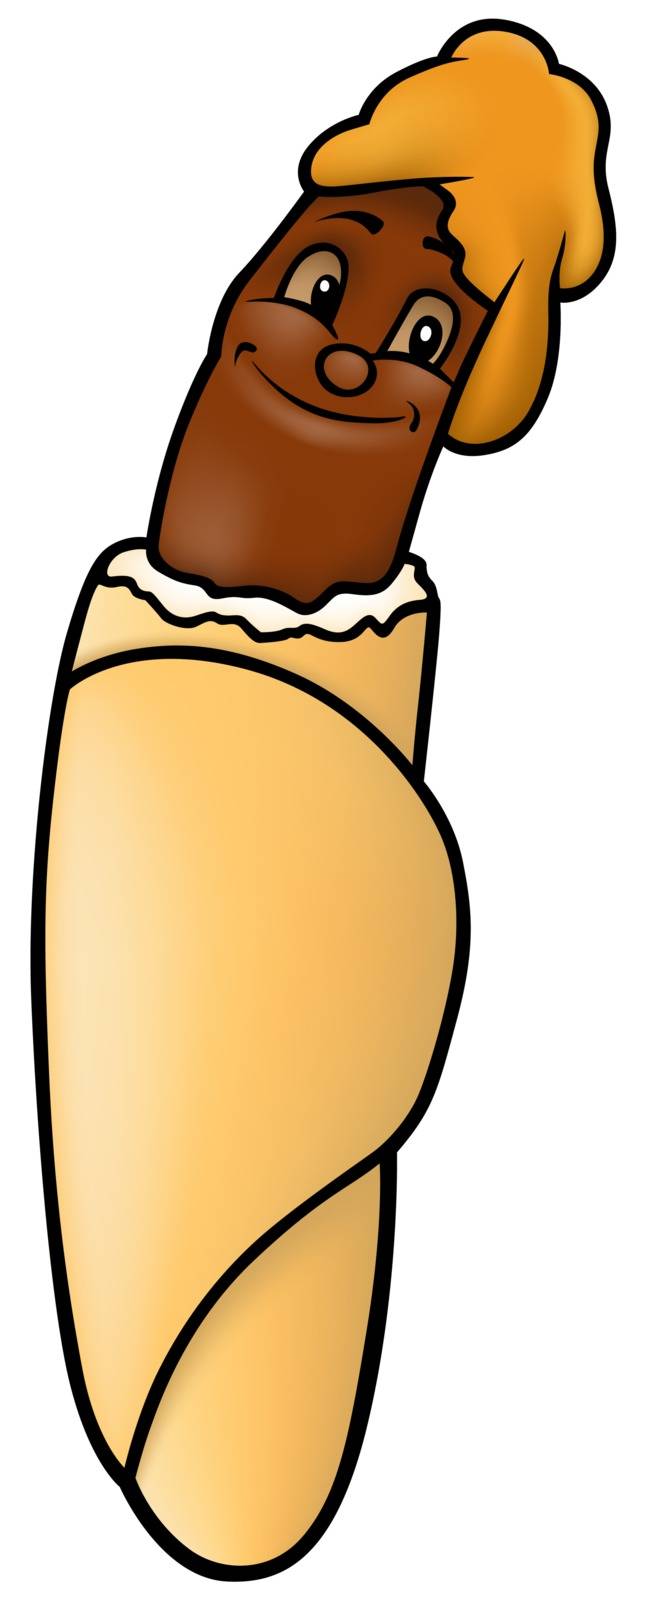 Hot Dog - Colored Cartoon Illustration, Vector